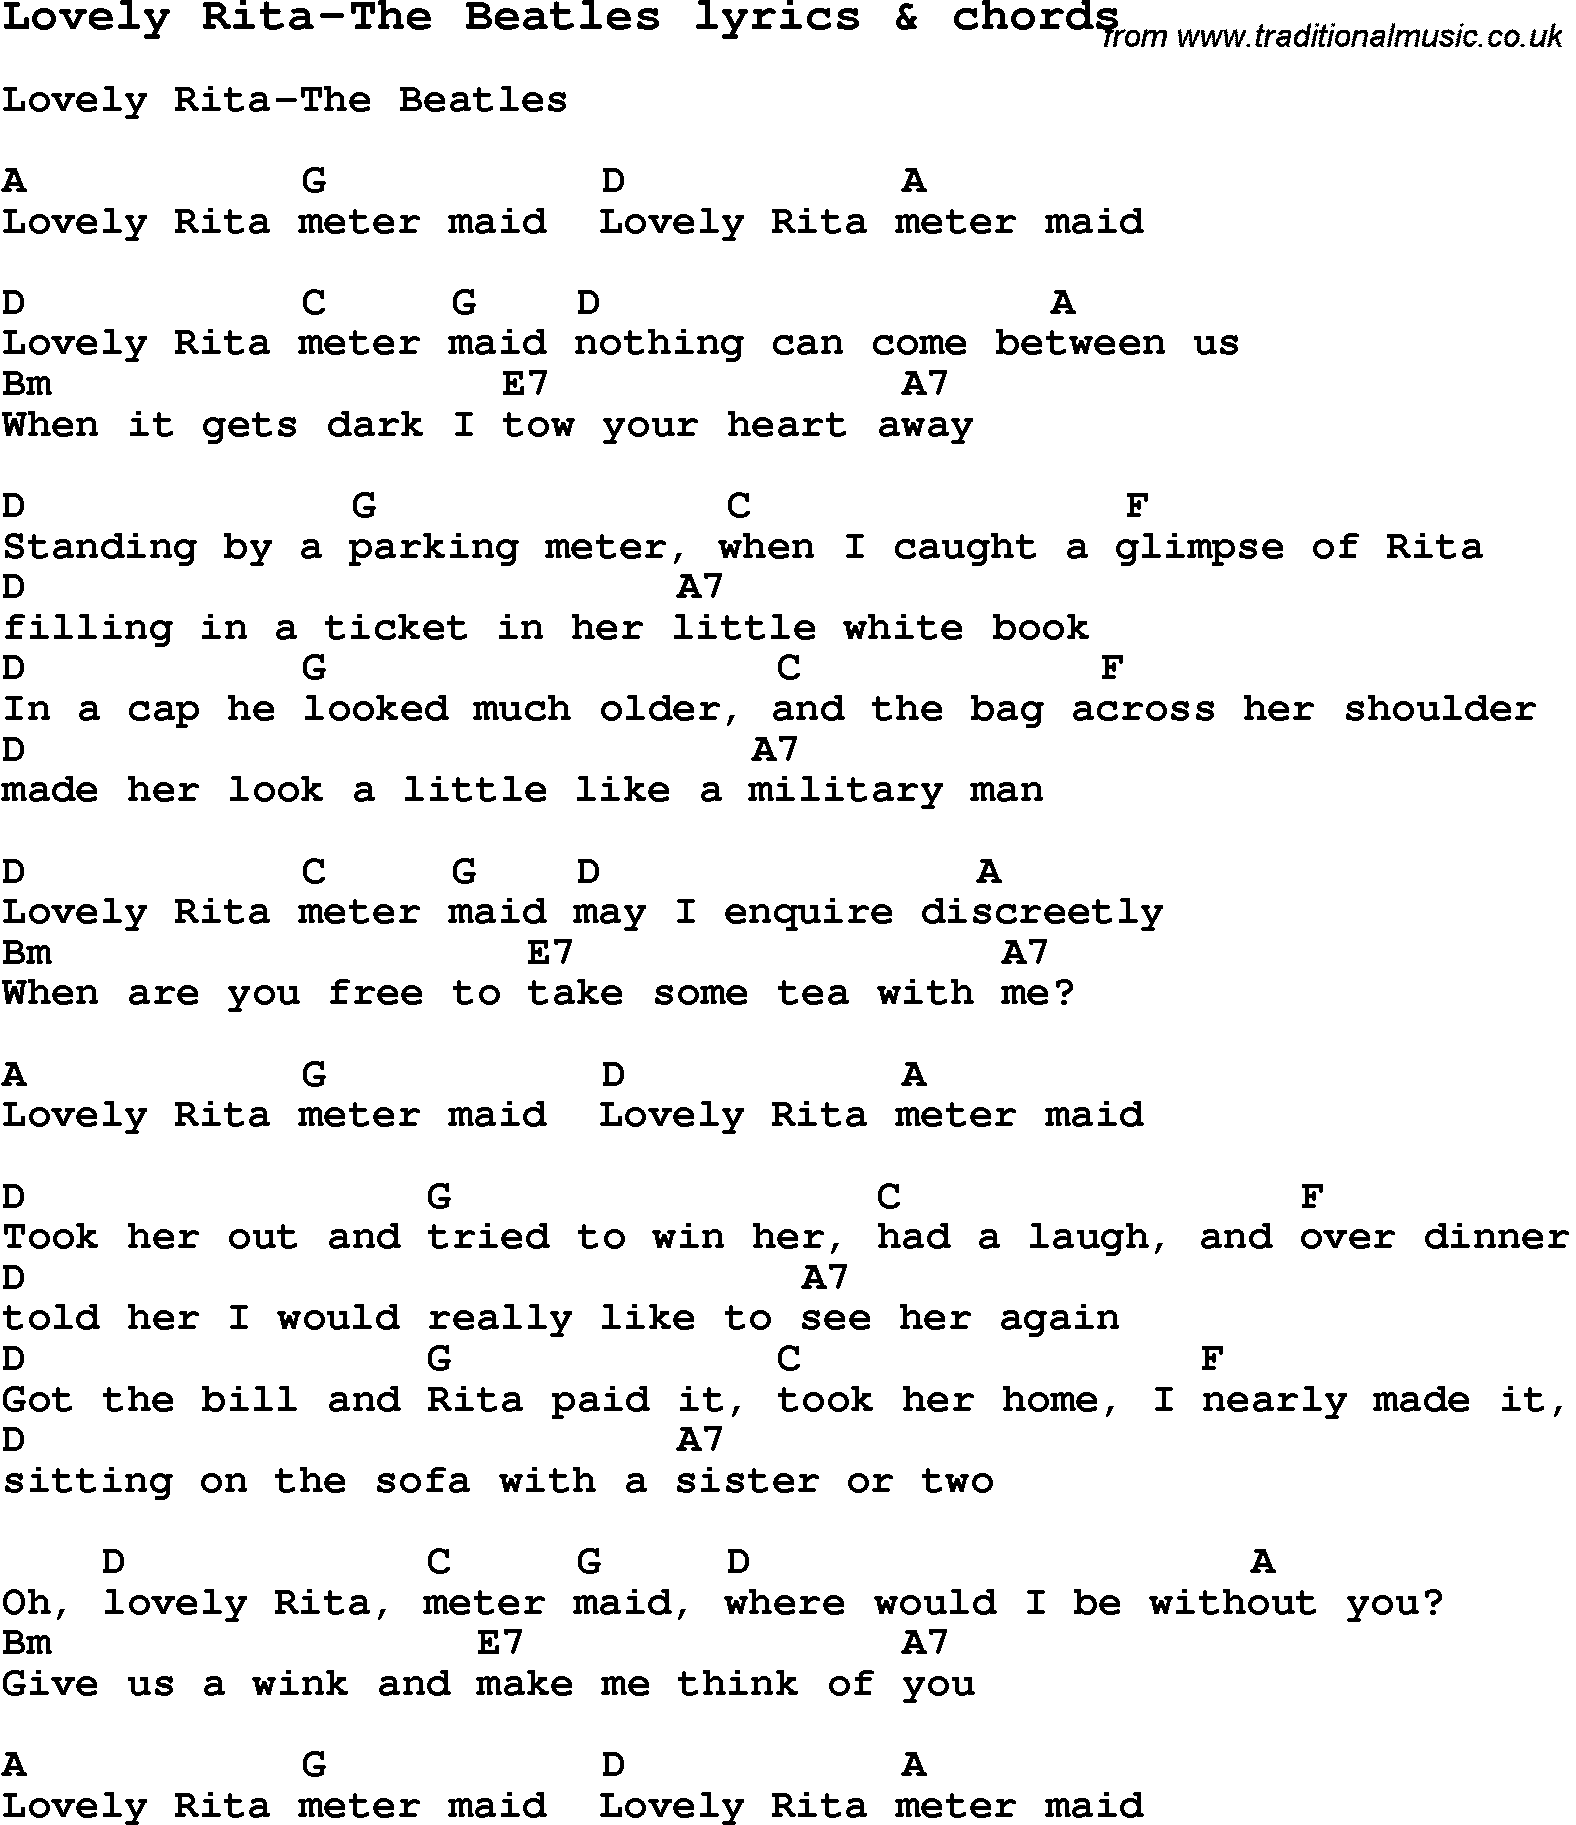 Love Song Lyrics for: Lovely Rita-The Beatles with chords for Ukulele, Guitar Banjo etc.